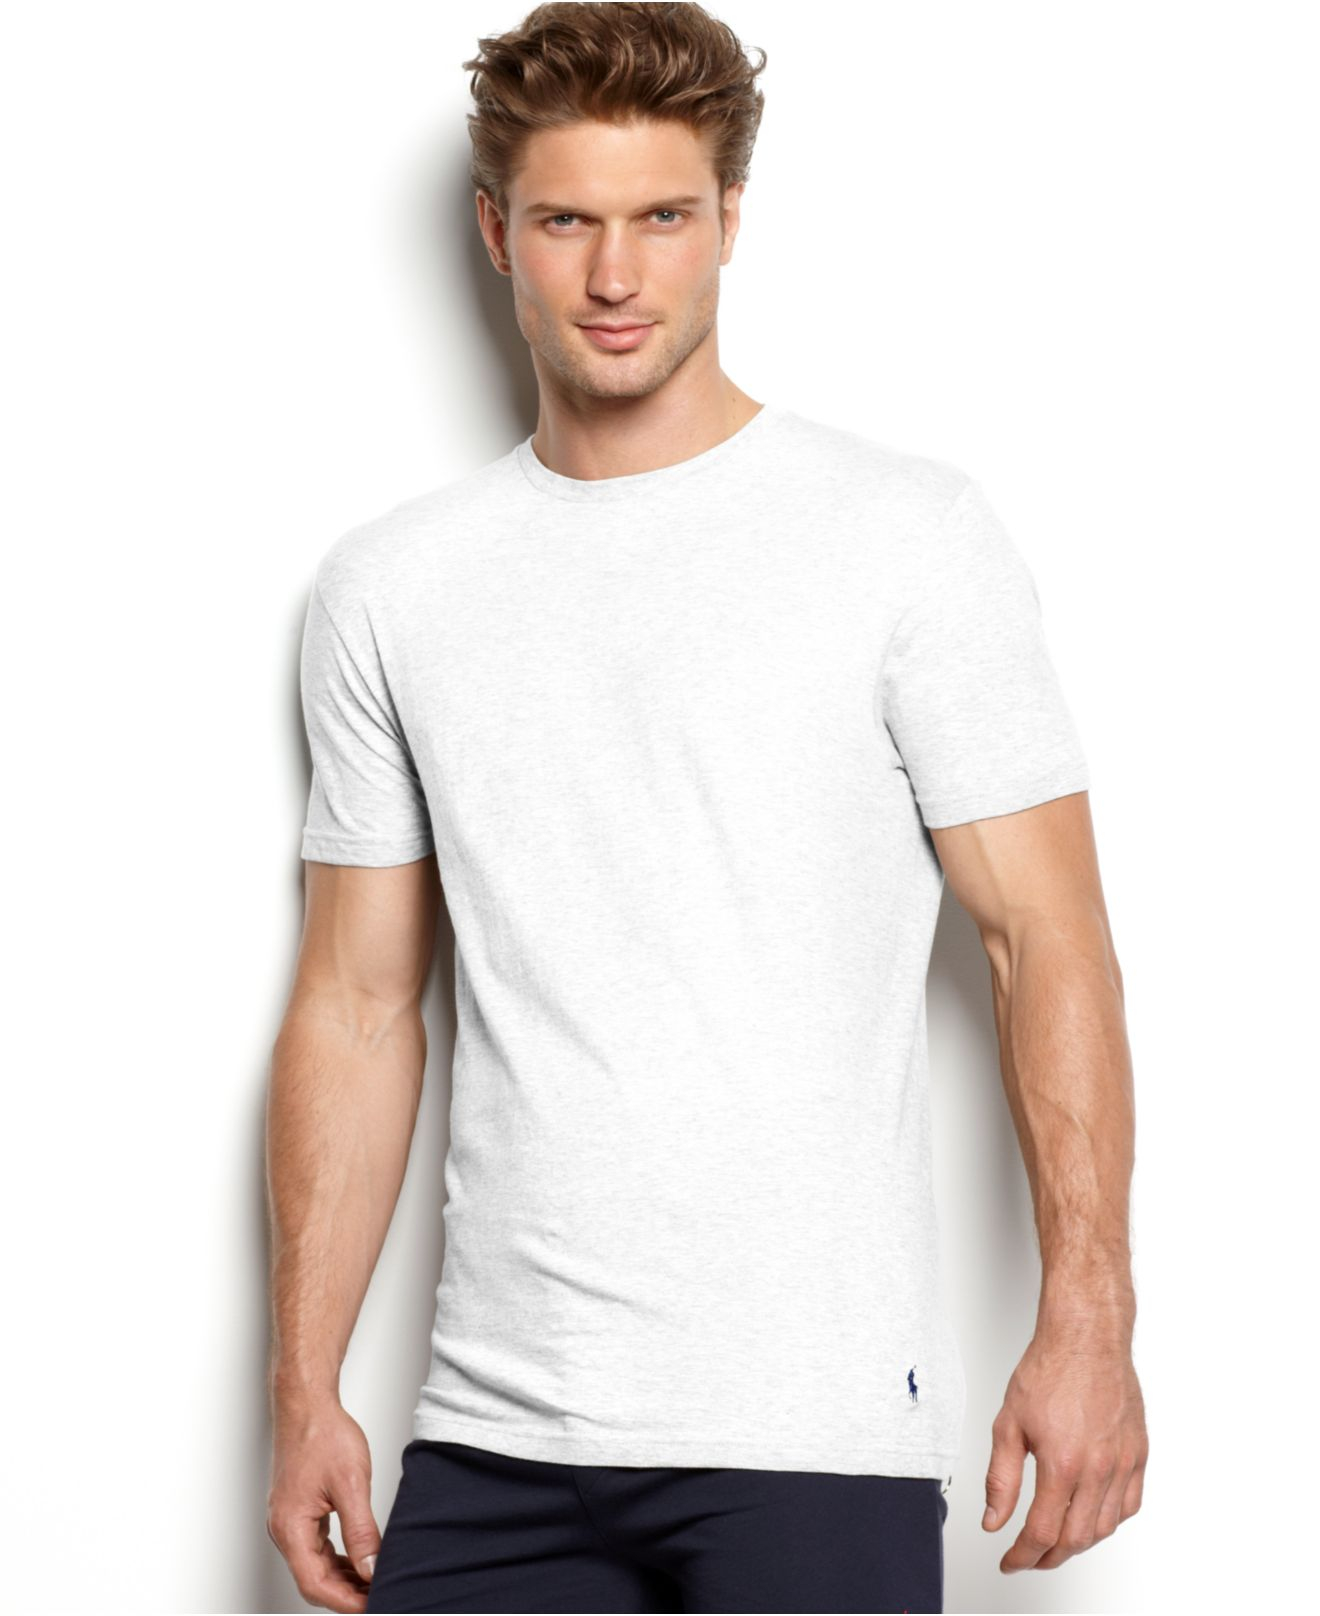 Lyst - Polo Ralph Lauren Celebrity Crew Neck T-Shirt 3 Pack in Gray for Men